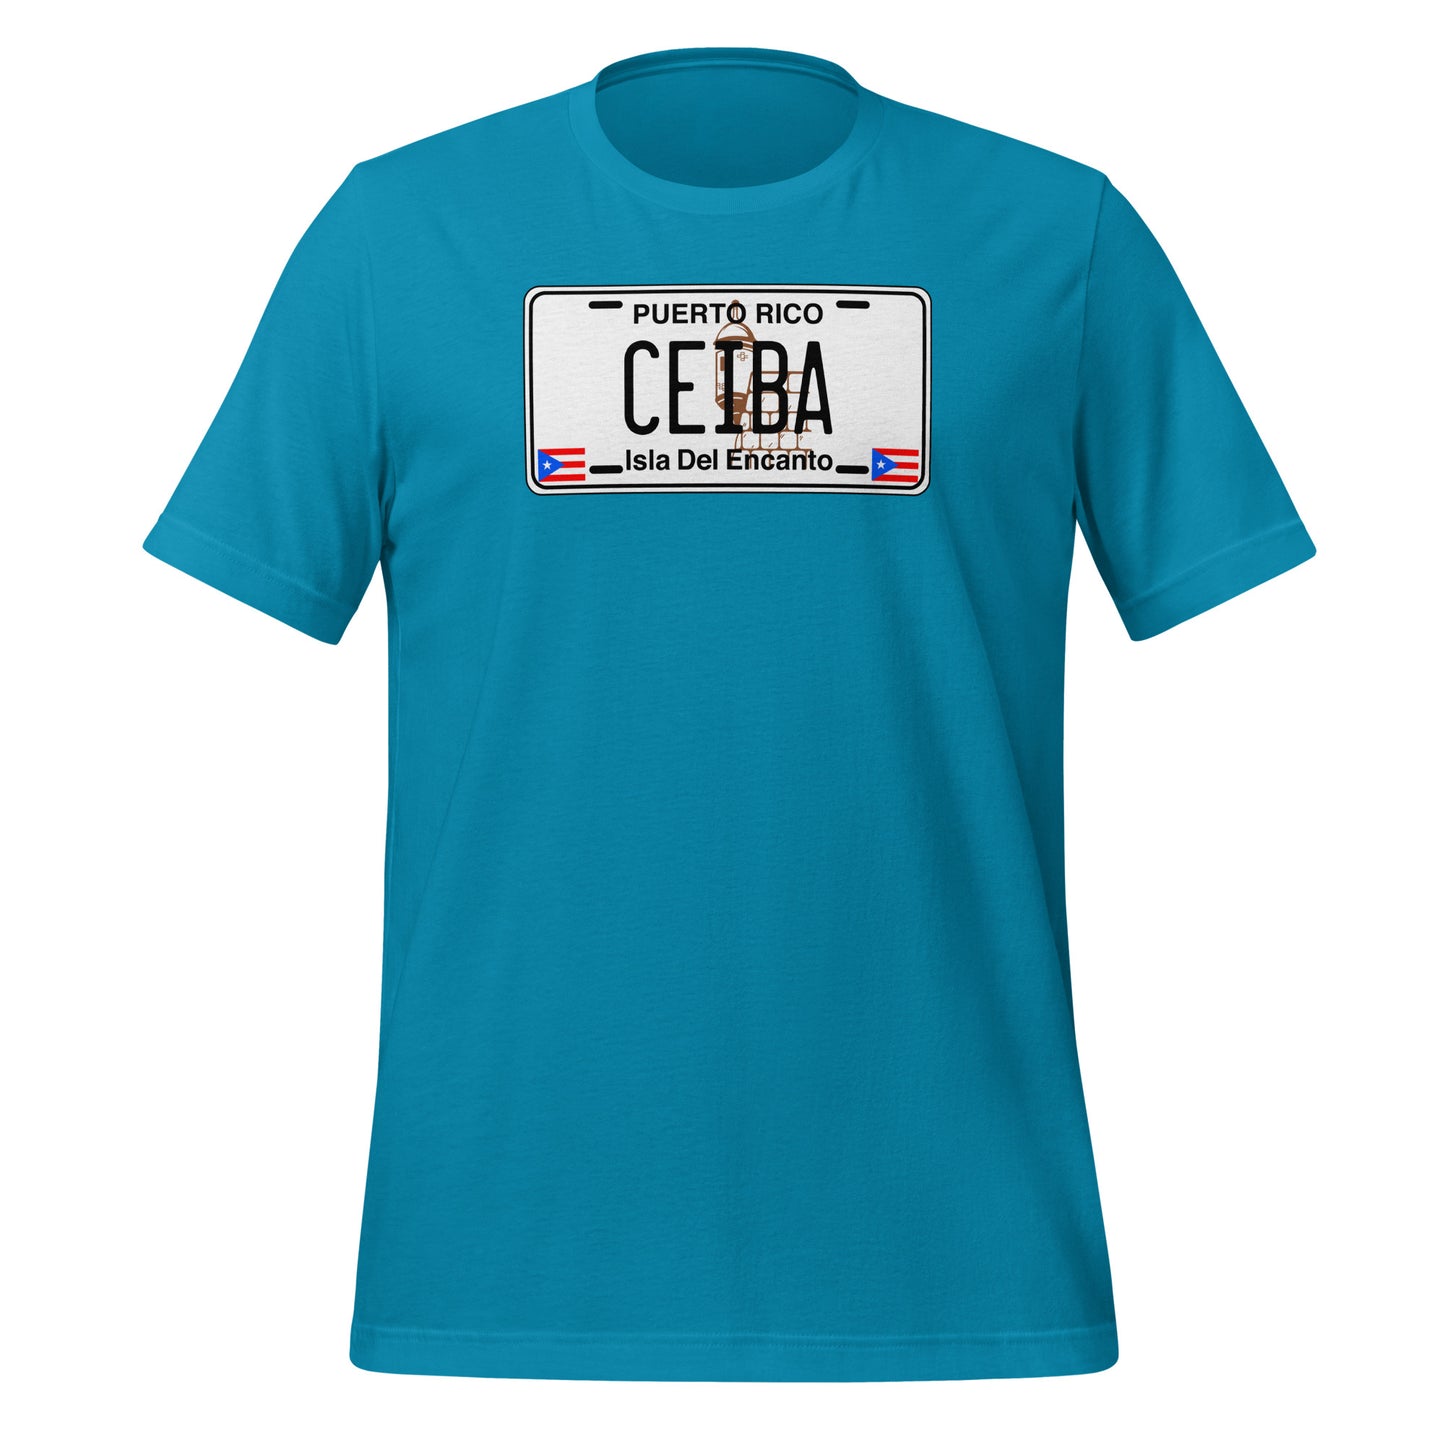 Ceiba Puerto Rico License Plate Unisex T-Shirt